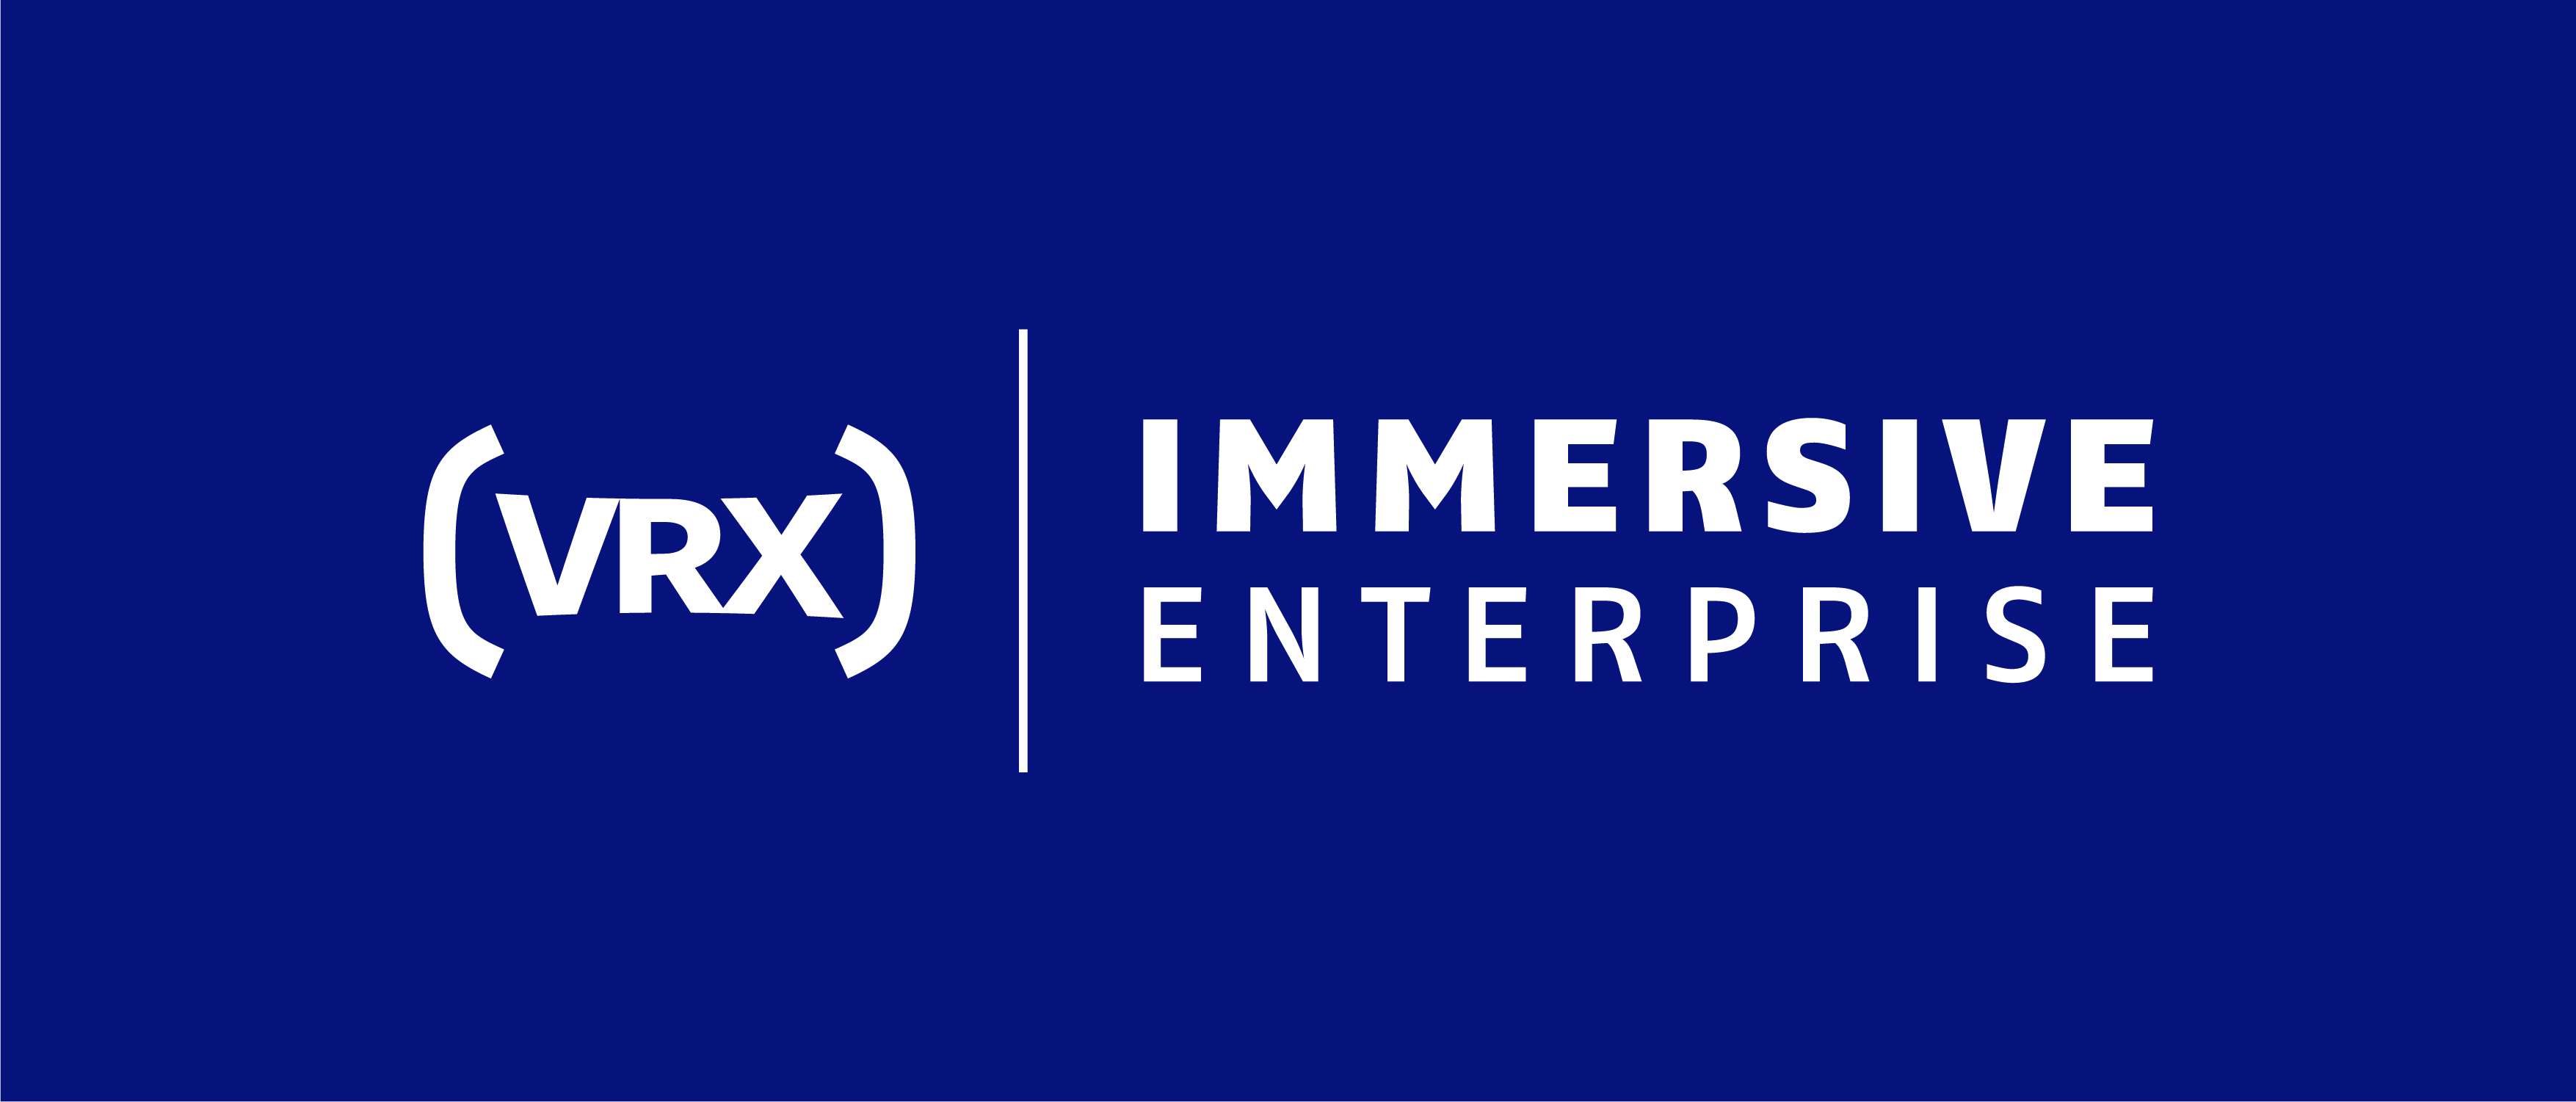 VRX: Immersive Enterprise 2018